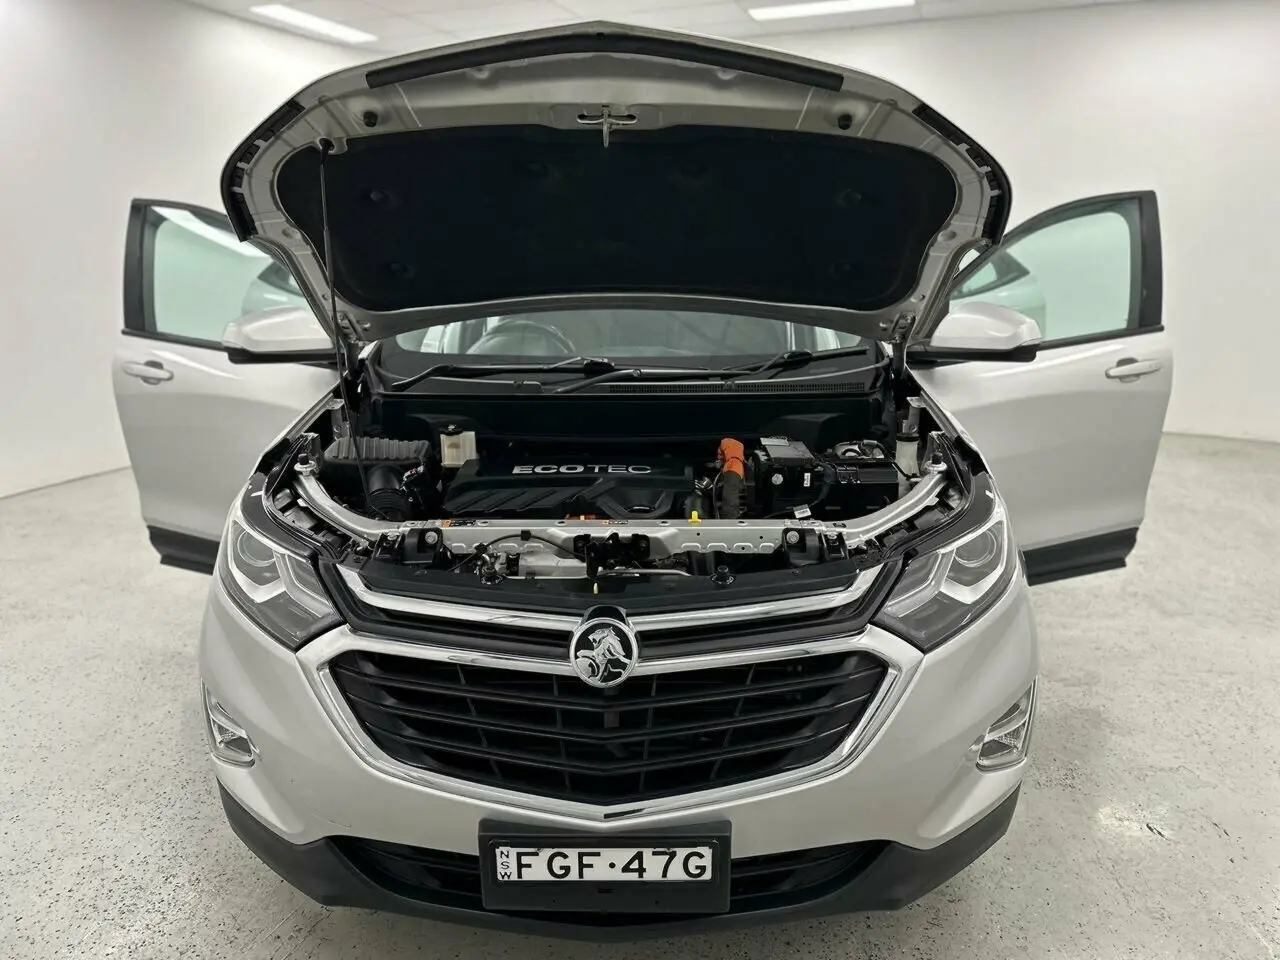 2019 Holden Equinox Image 10